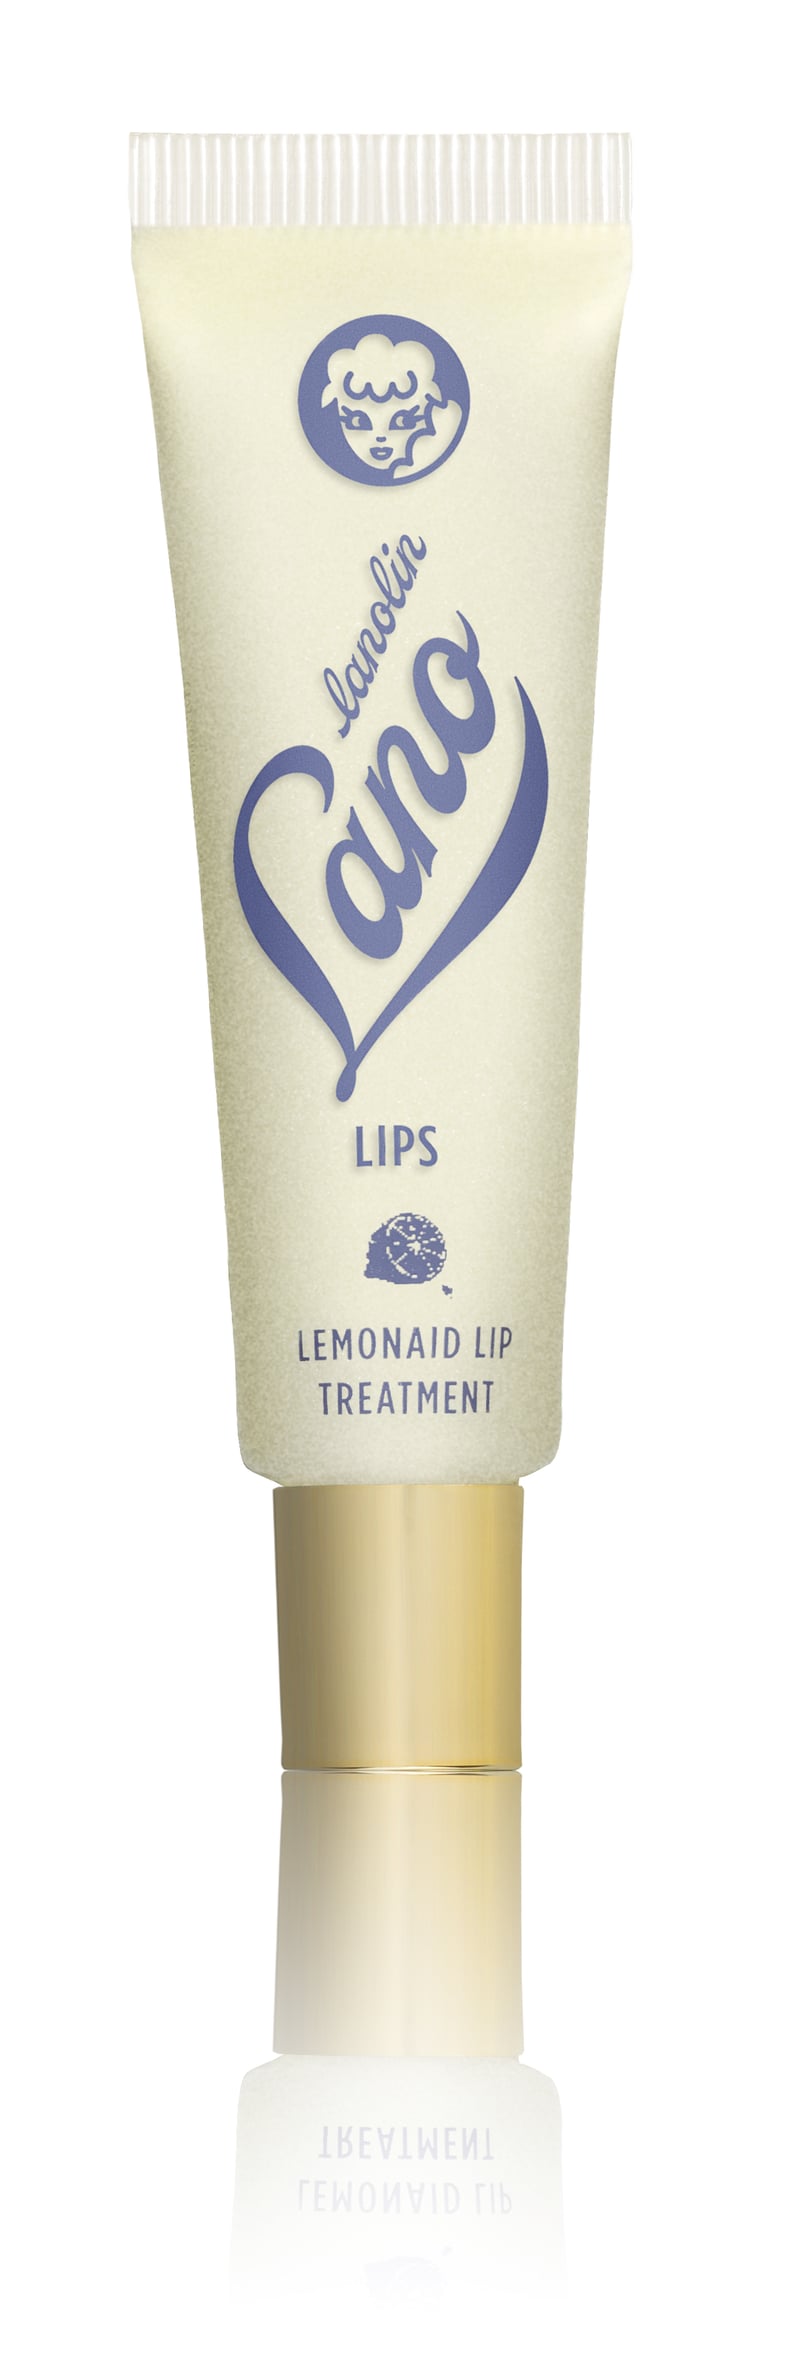 Lano Lemonaid Lip Treatment